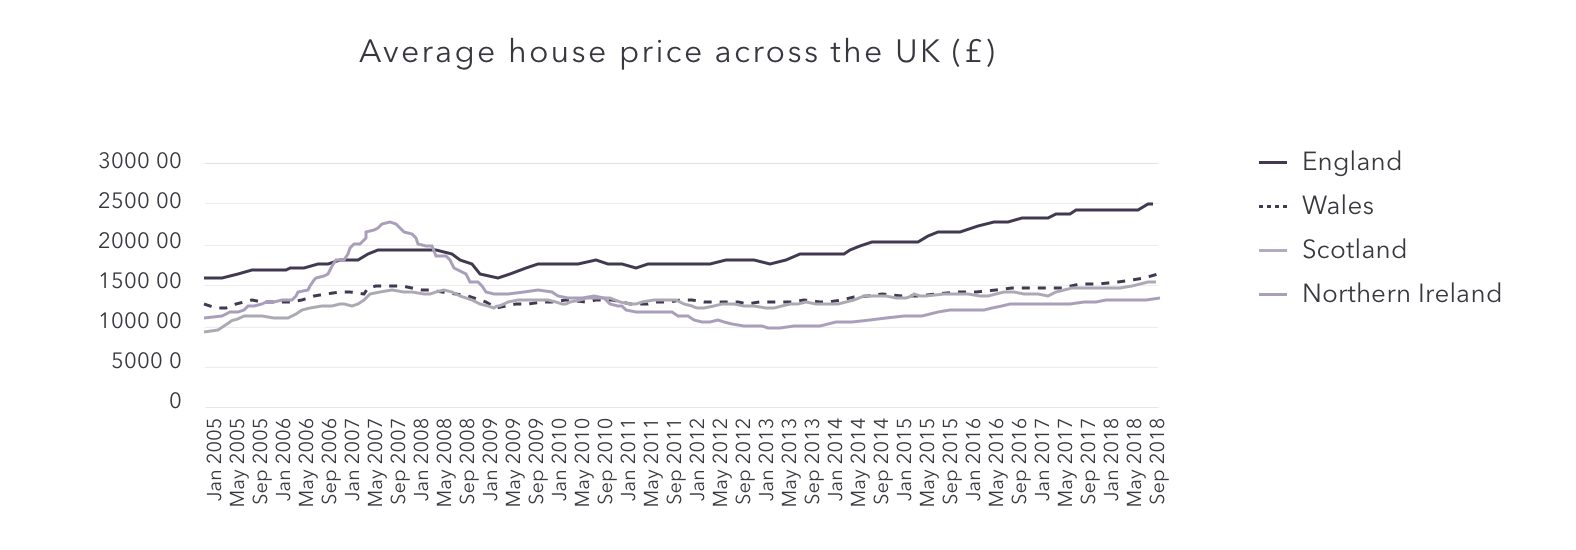 Average UK house prices across the UK 